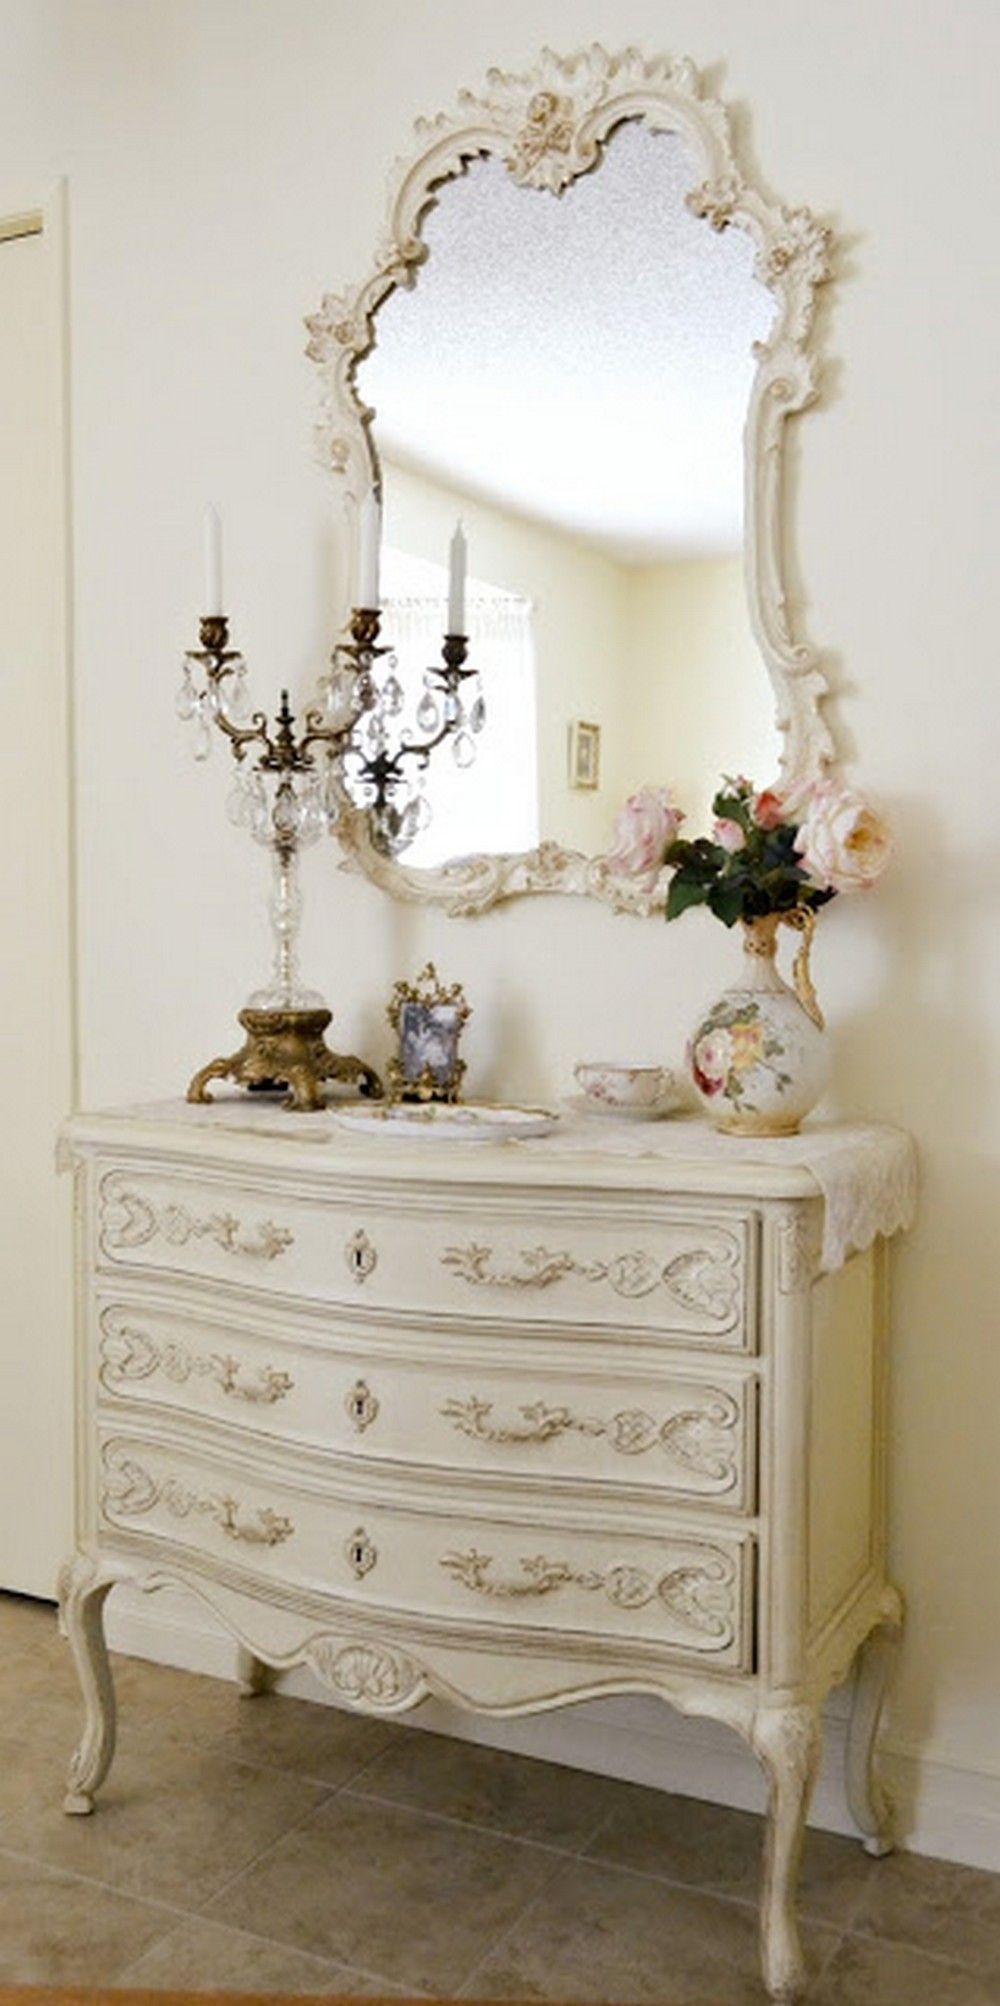 White vintage style bedroom furniture